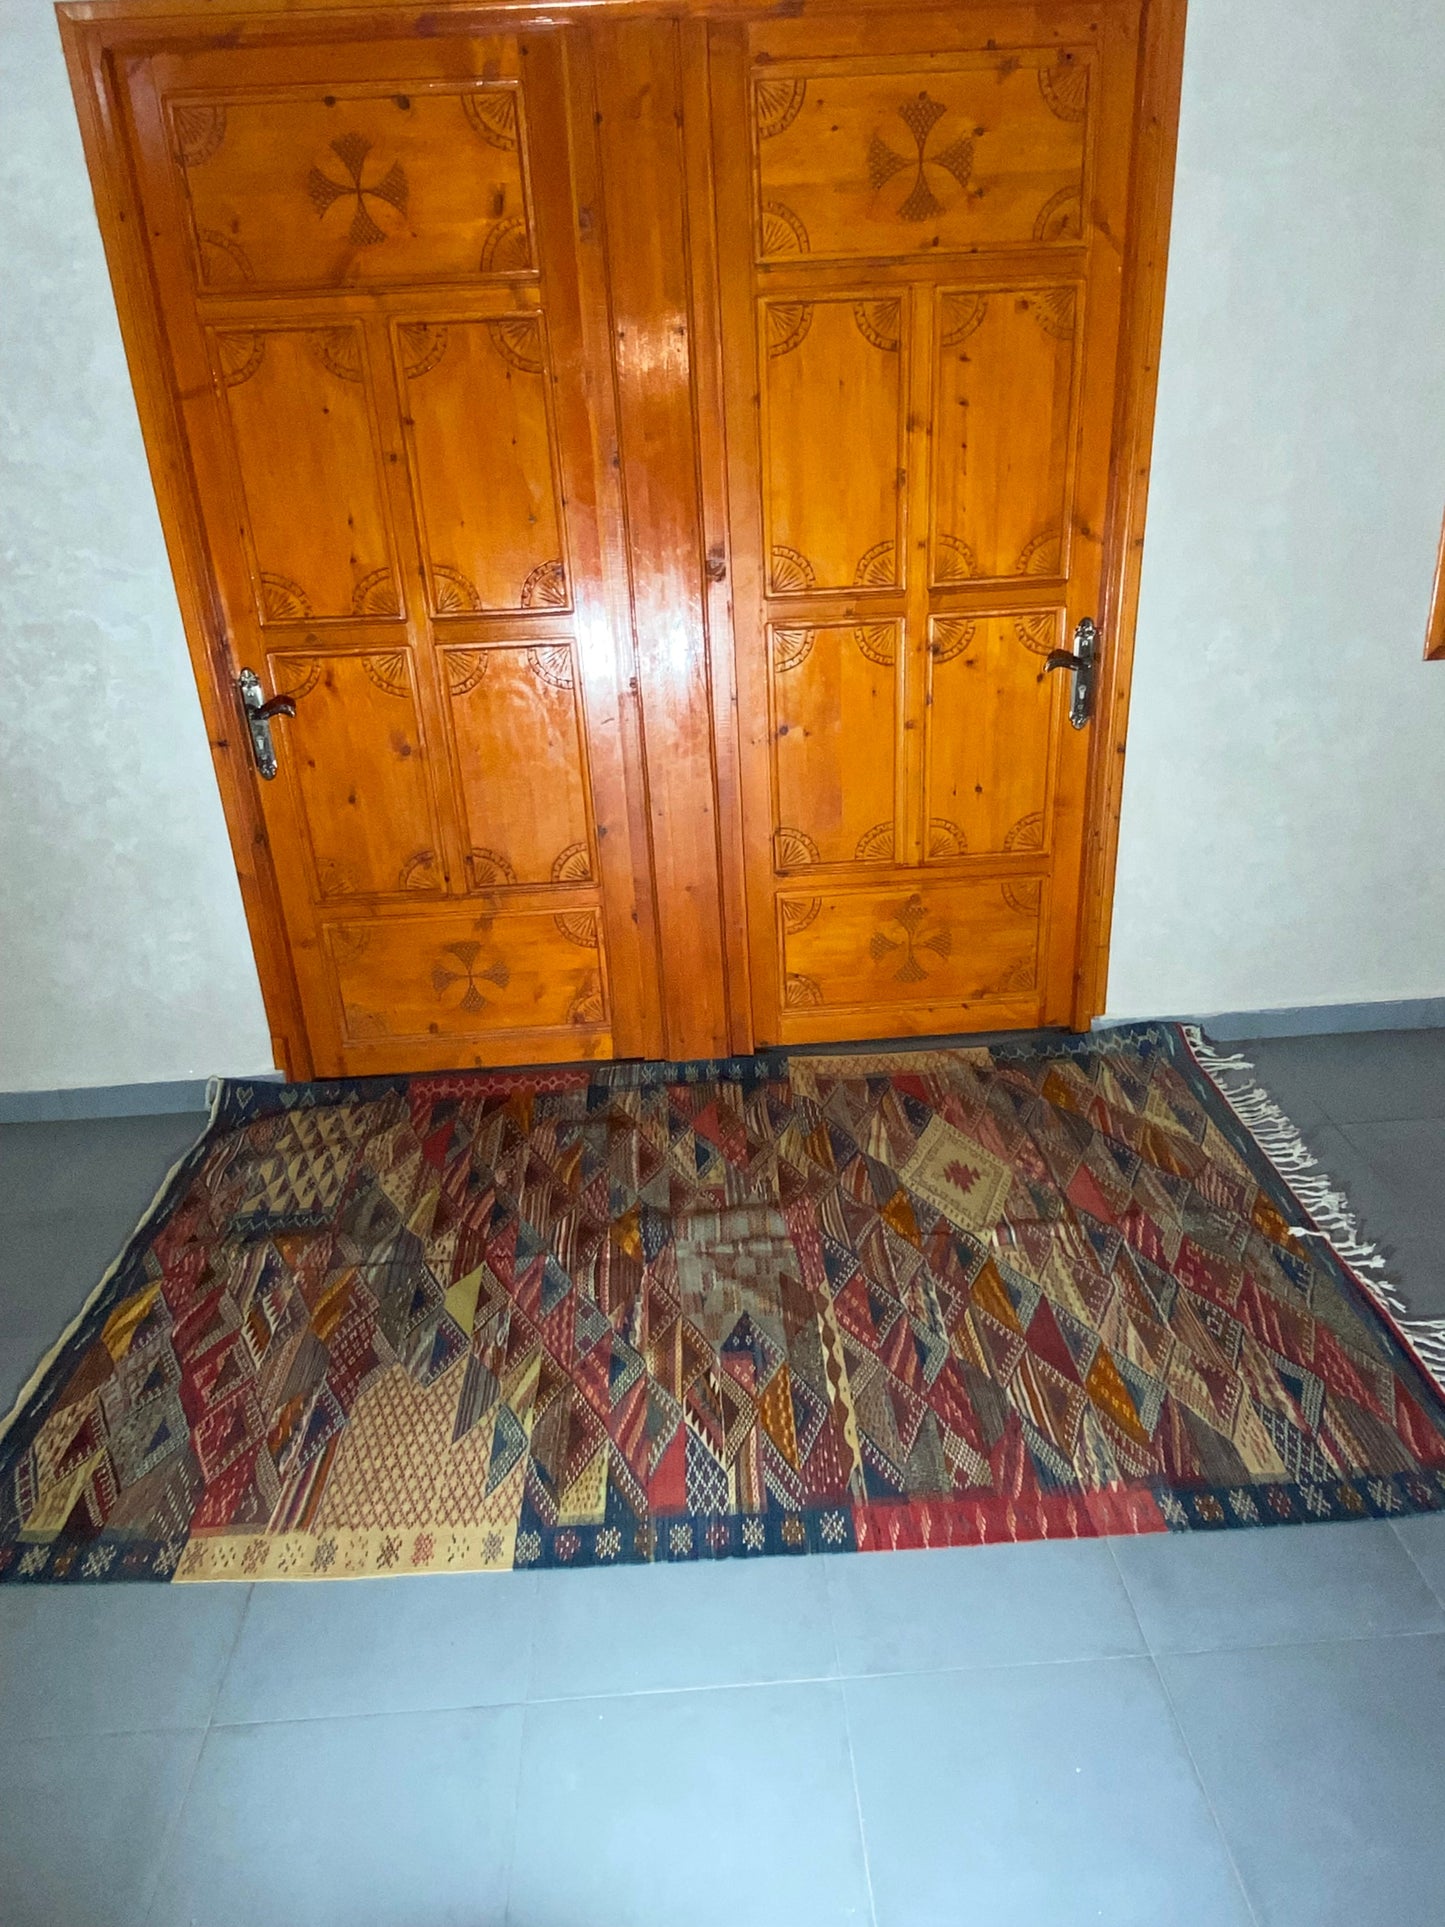 Moroccan  Kilim  handmade 100%wool berber  rugs.  size is 255x155 cm